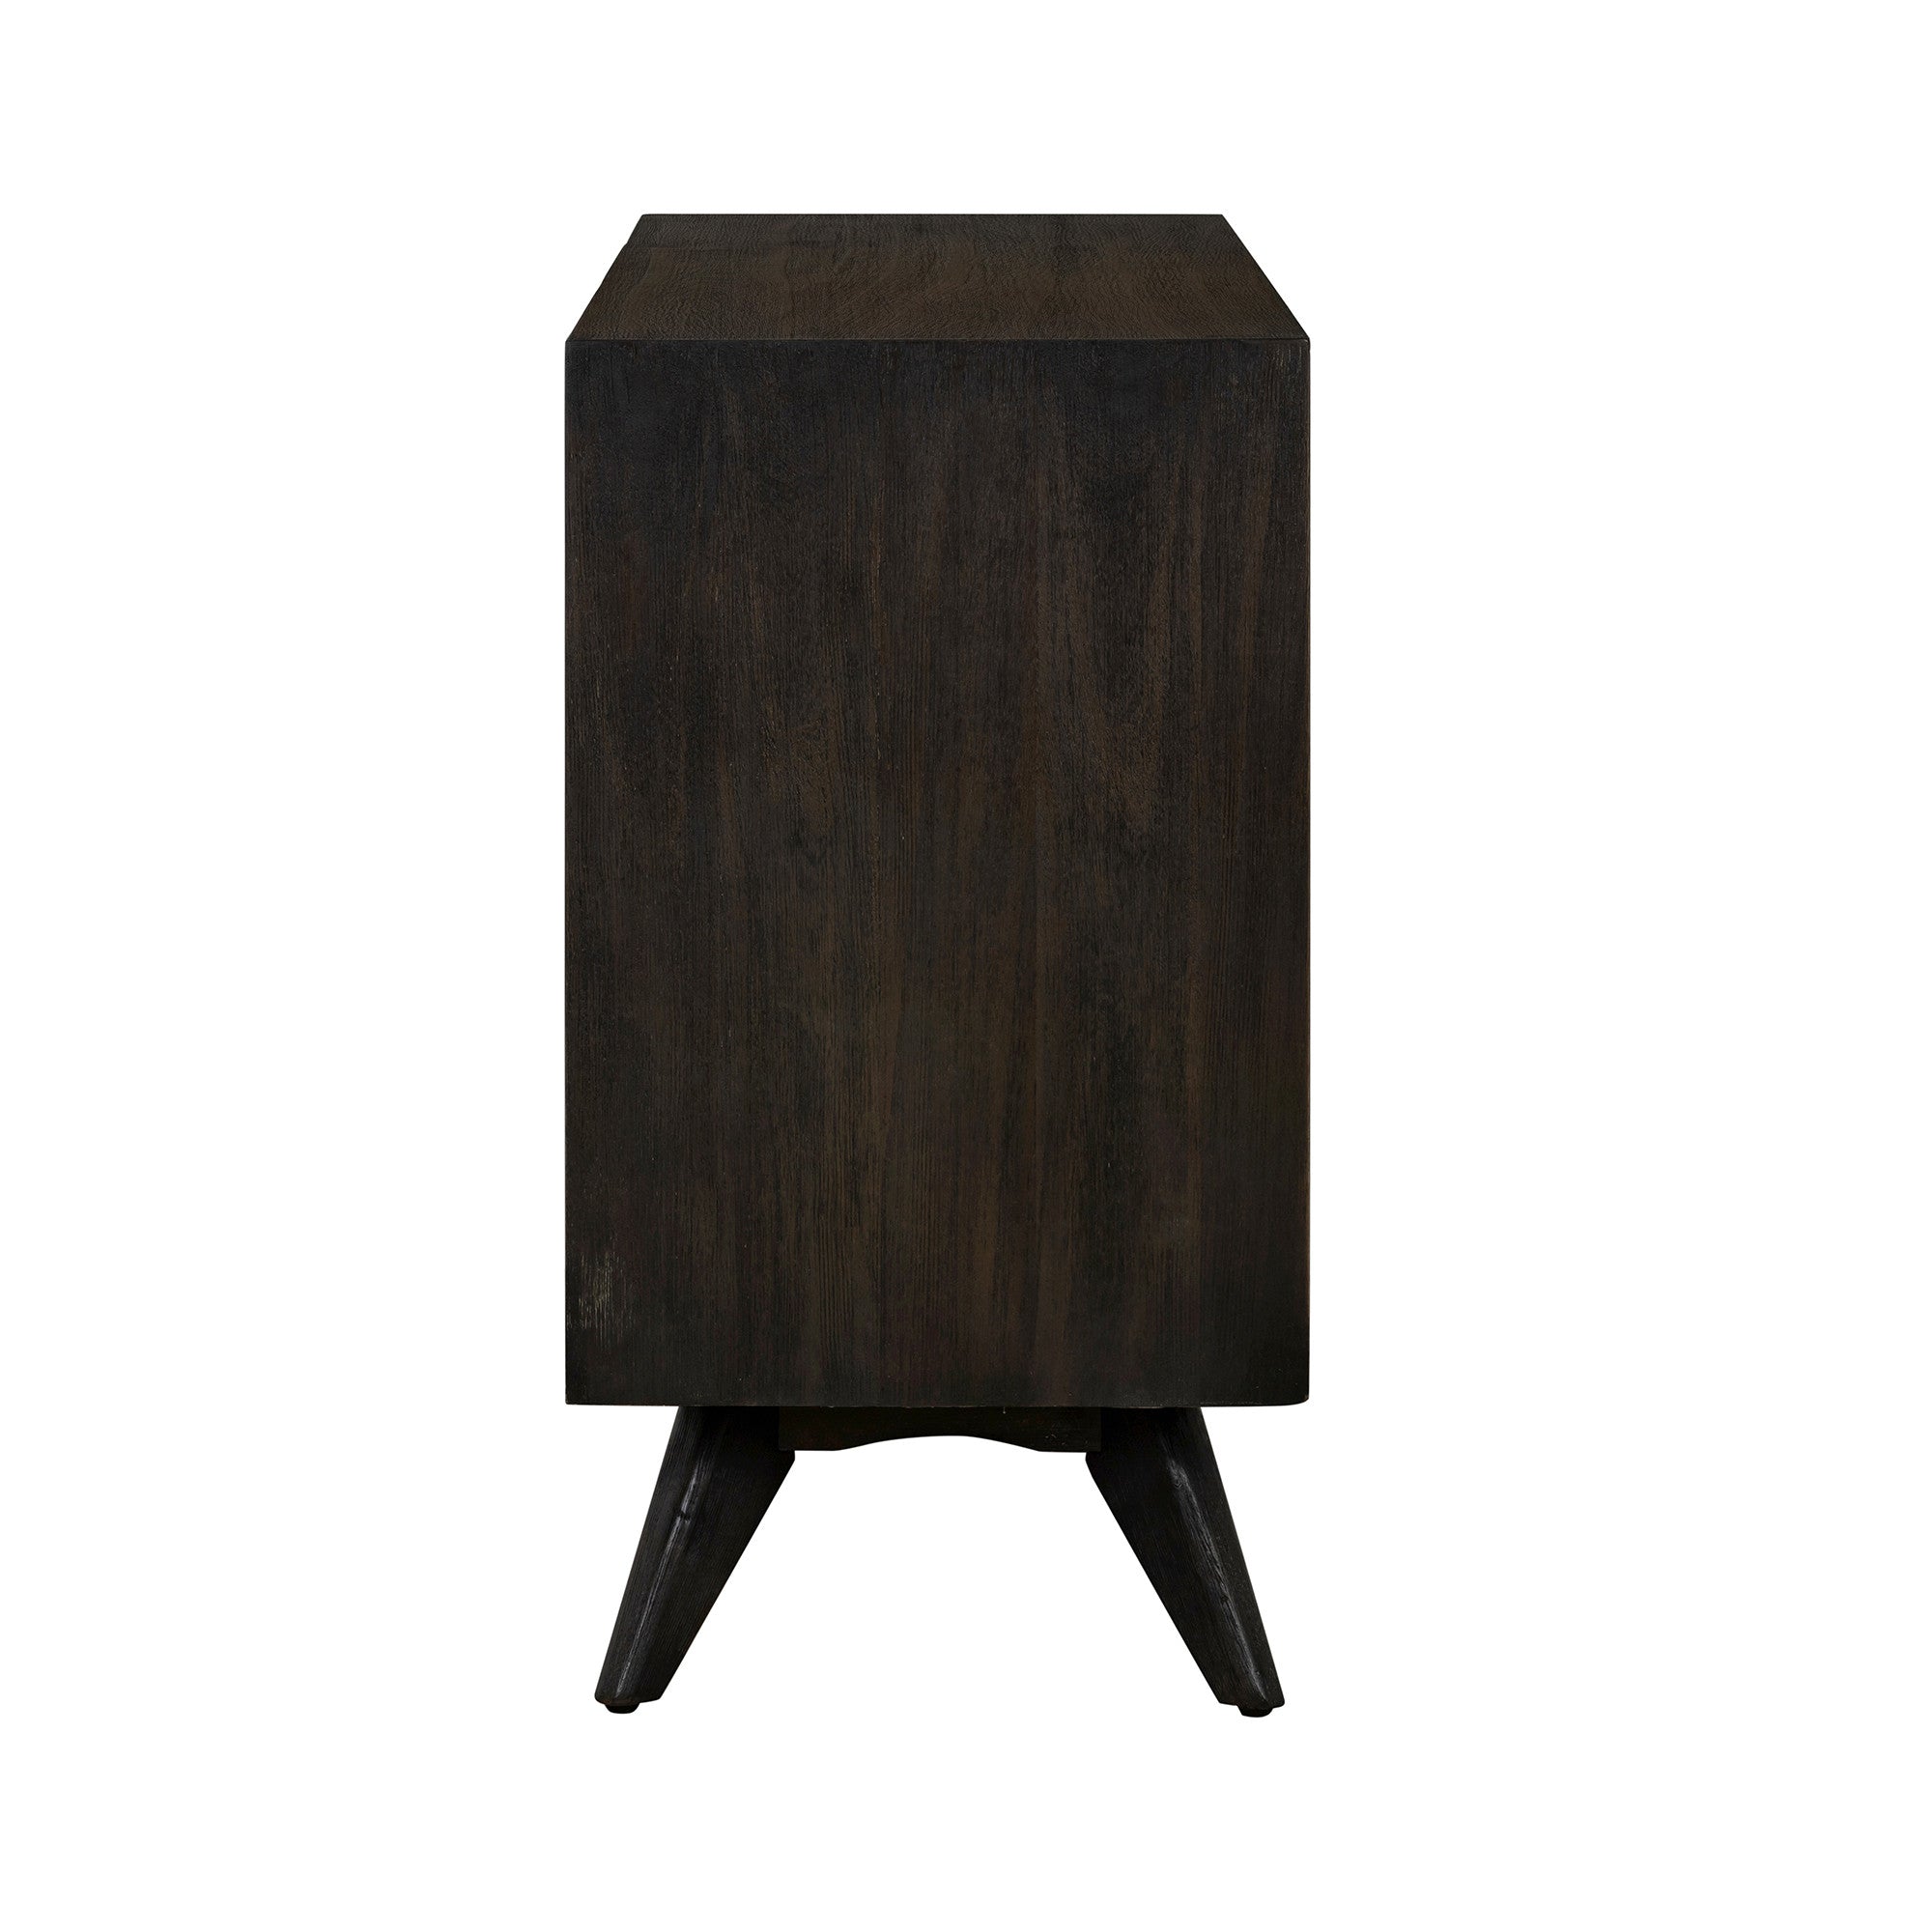 63" Brown Solid Wood Six Drawer Dresser